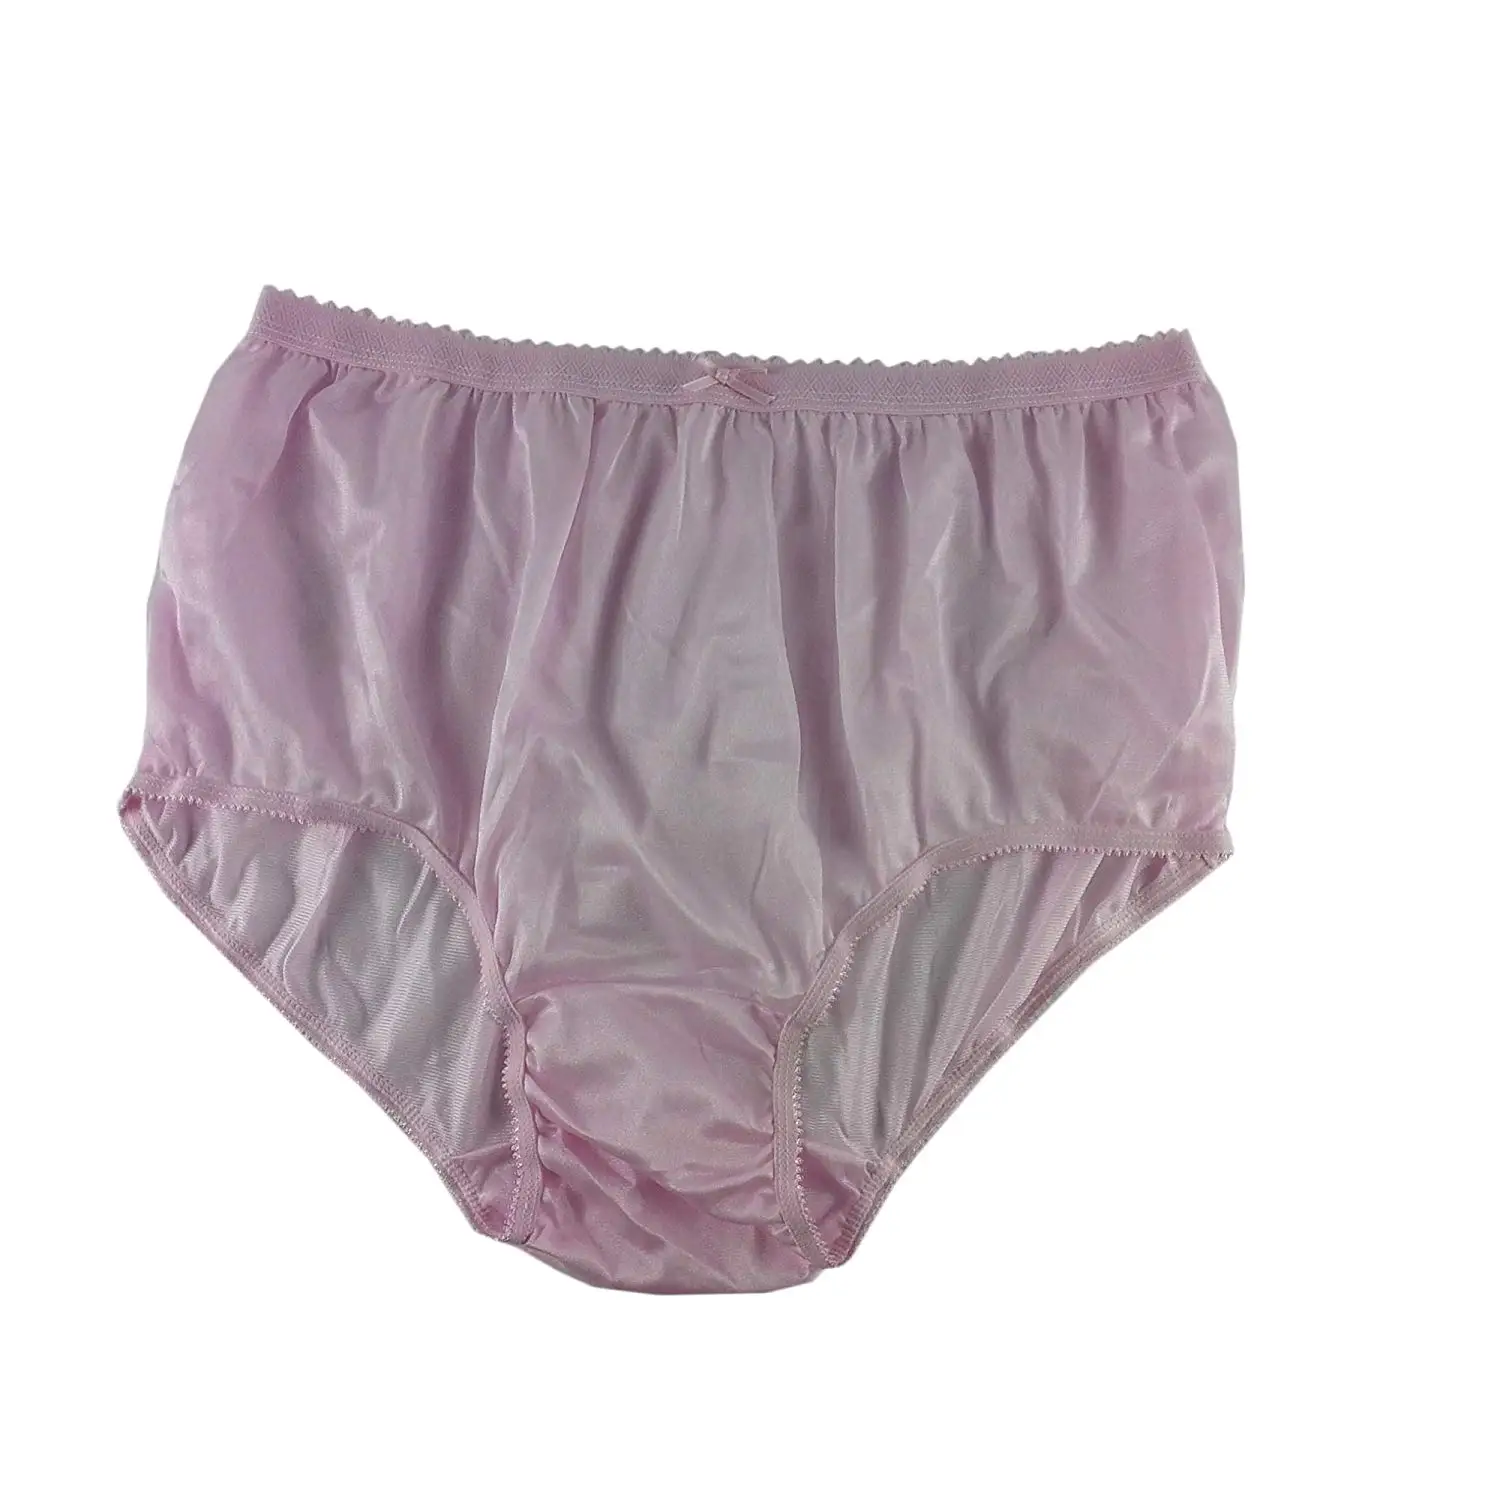 Buy Vintage Style Pink Granny Plain Waist Panties Briefs Sheer Nylon